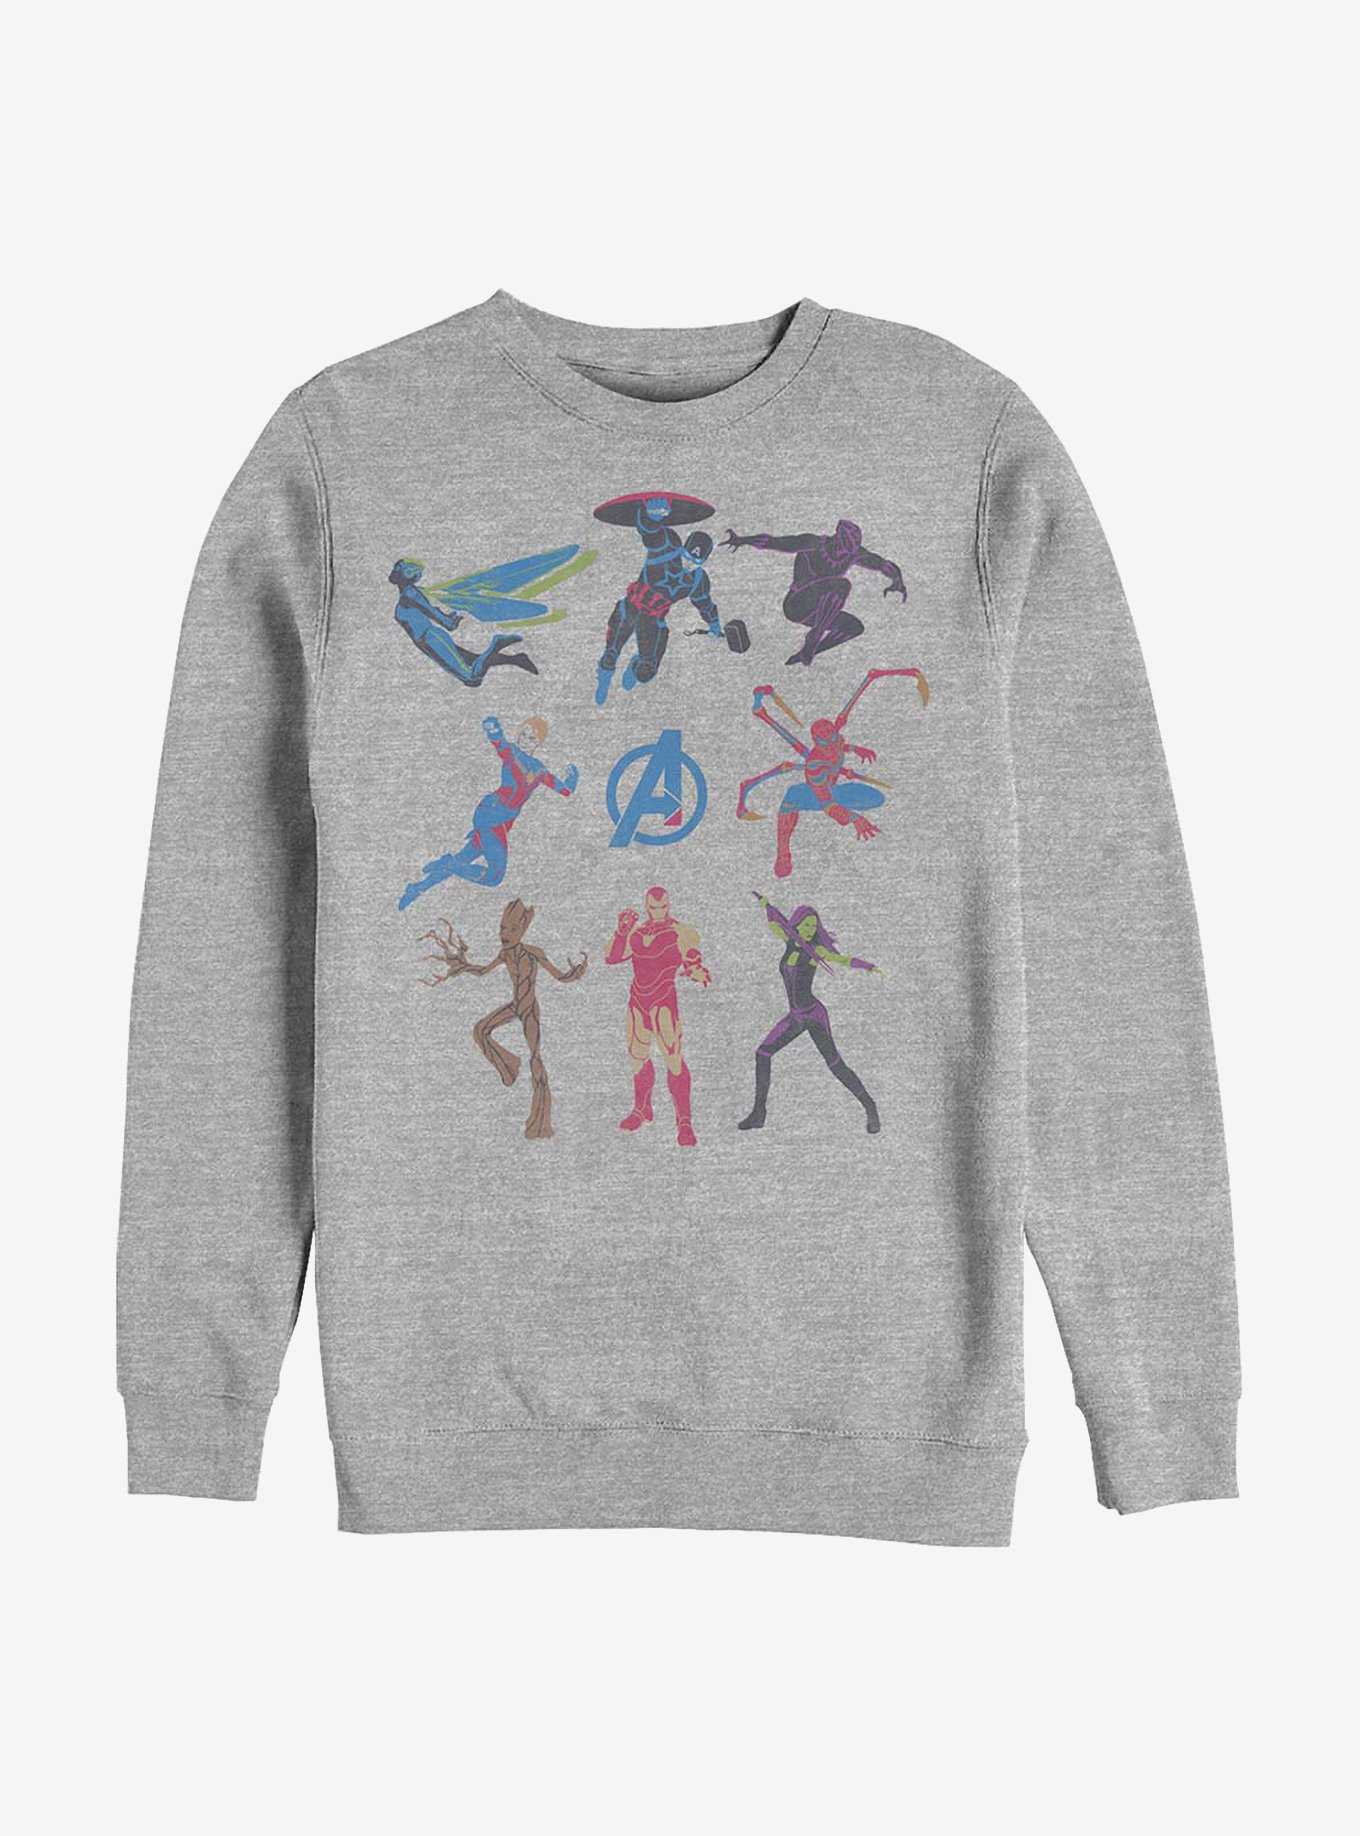 Marvel Avengers Character Collage Crew Sweatshirt, , hi-res